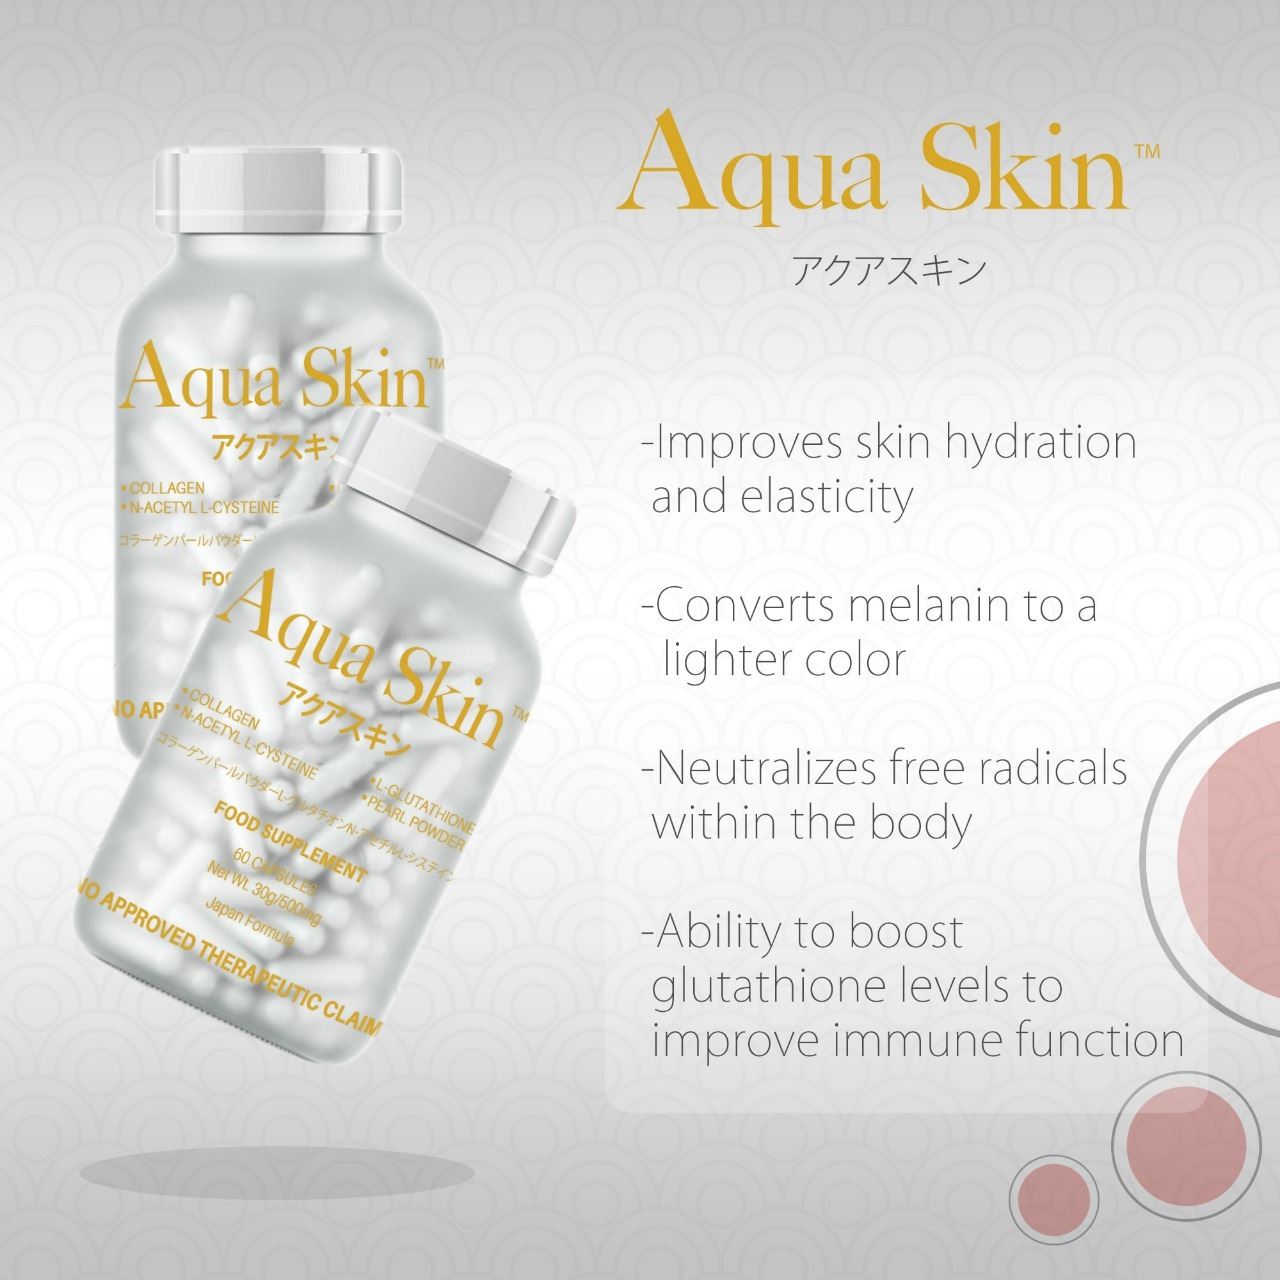 Aqua Skin Glutathione and Collagen Whitening Capsules reviews